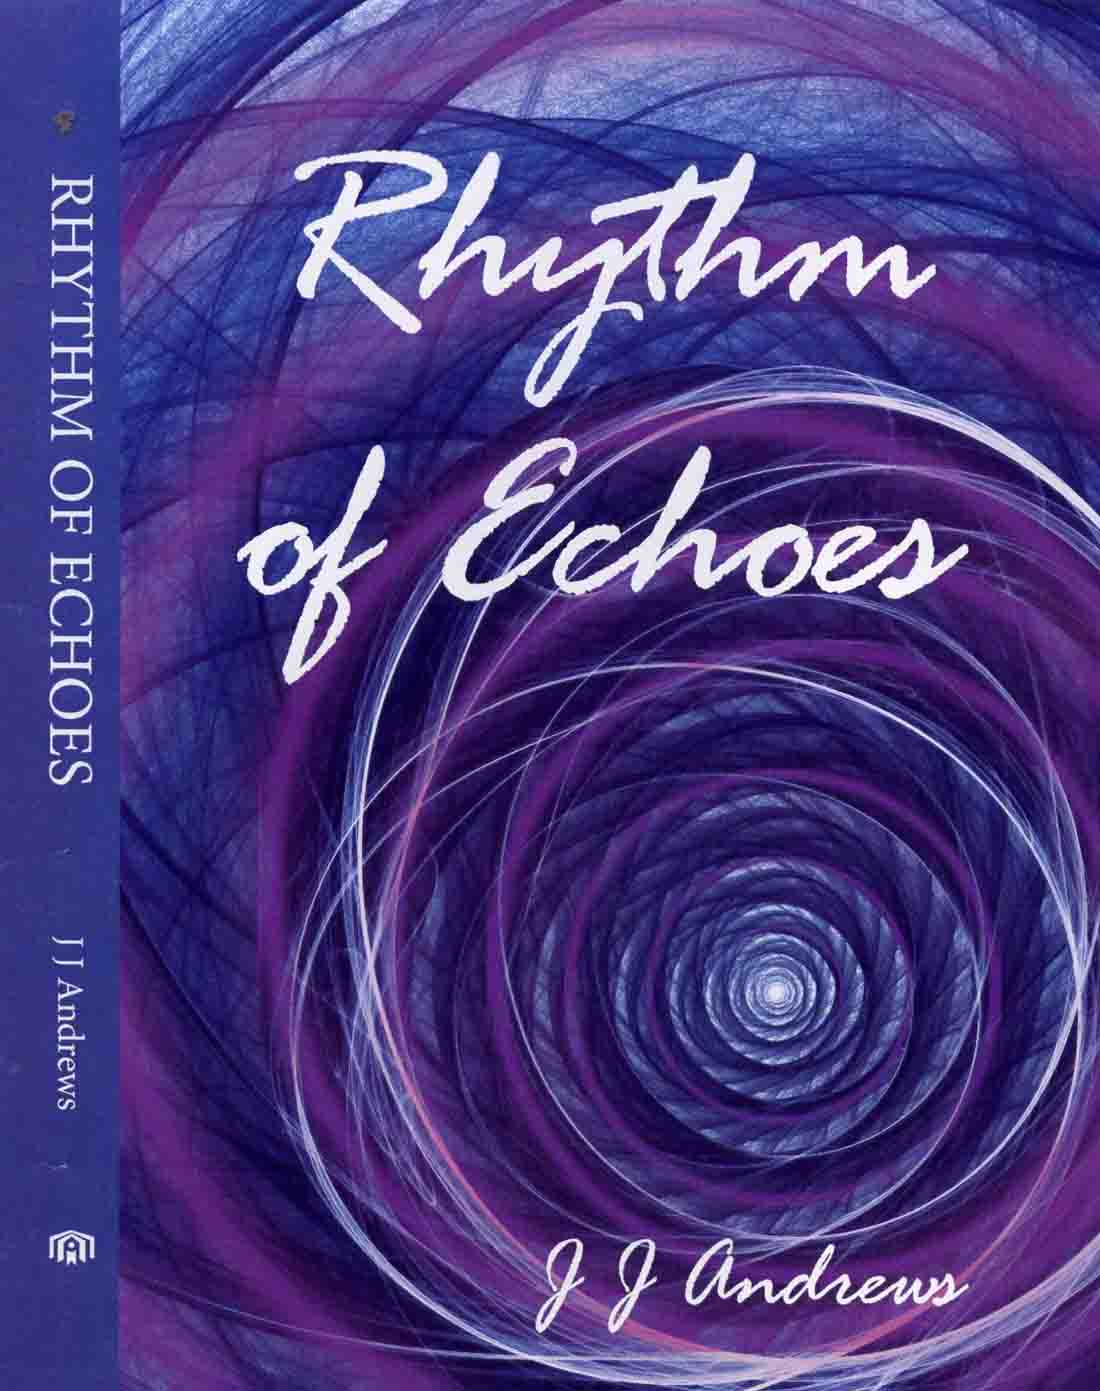 Rhythm of Echoes by J. J. Andrews